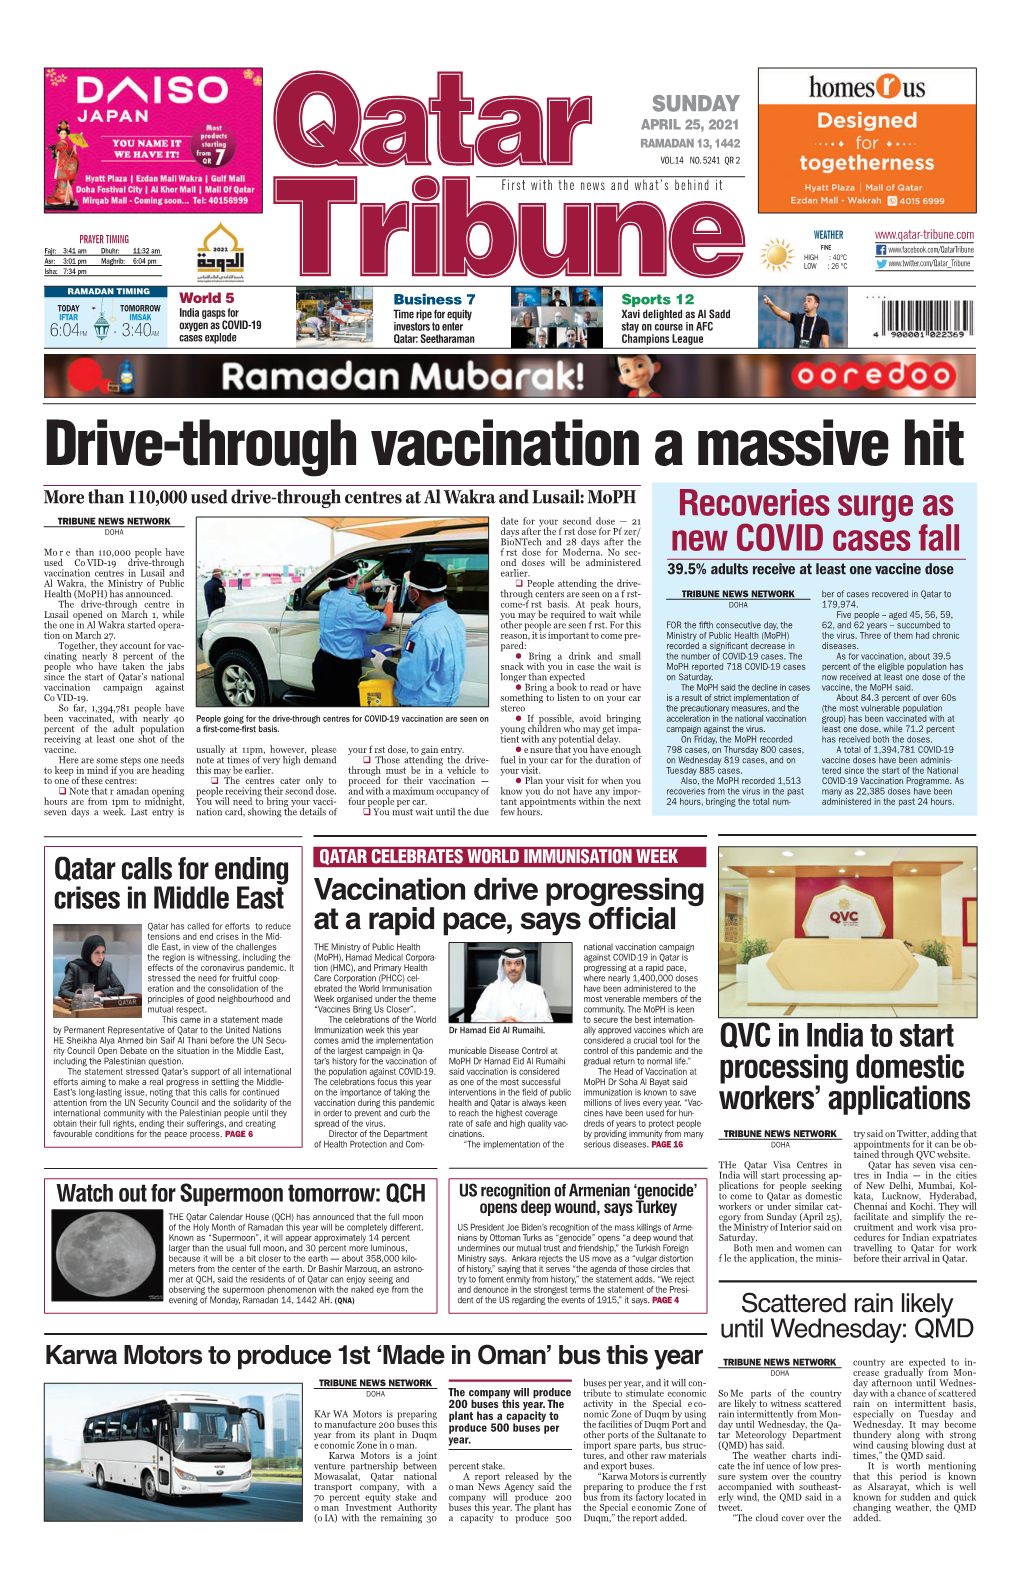 Drive-Through Vaccination a Massive